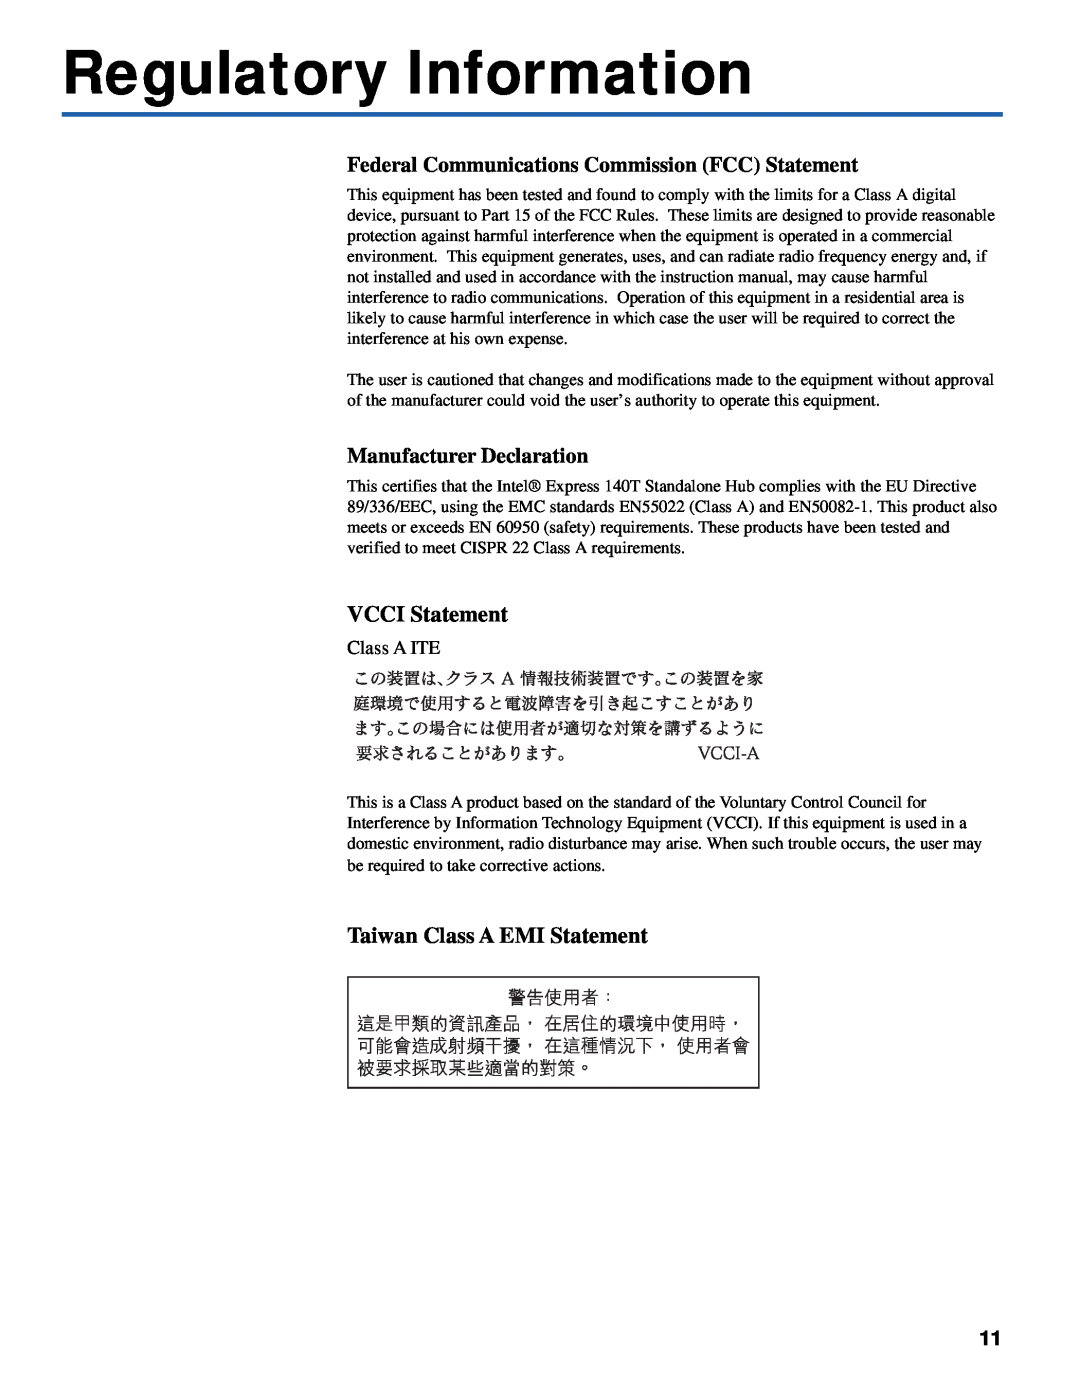 Intel 140T quick start Regulatory Information, VCCI Statement, Taiwan Class A EMI Statement, Manufacturer Declaration 